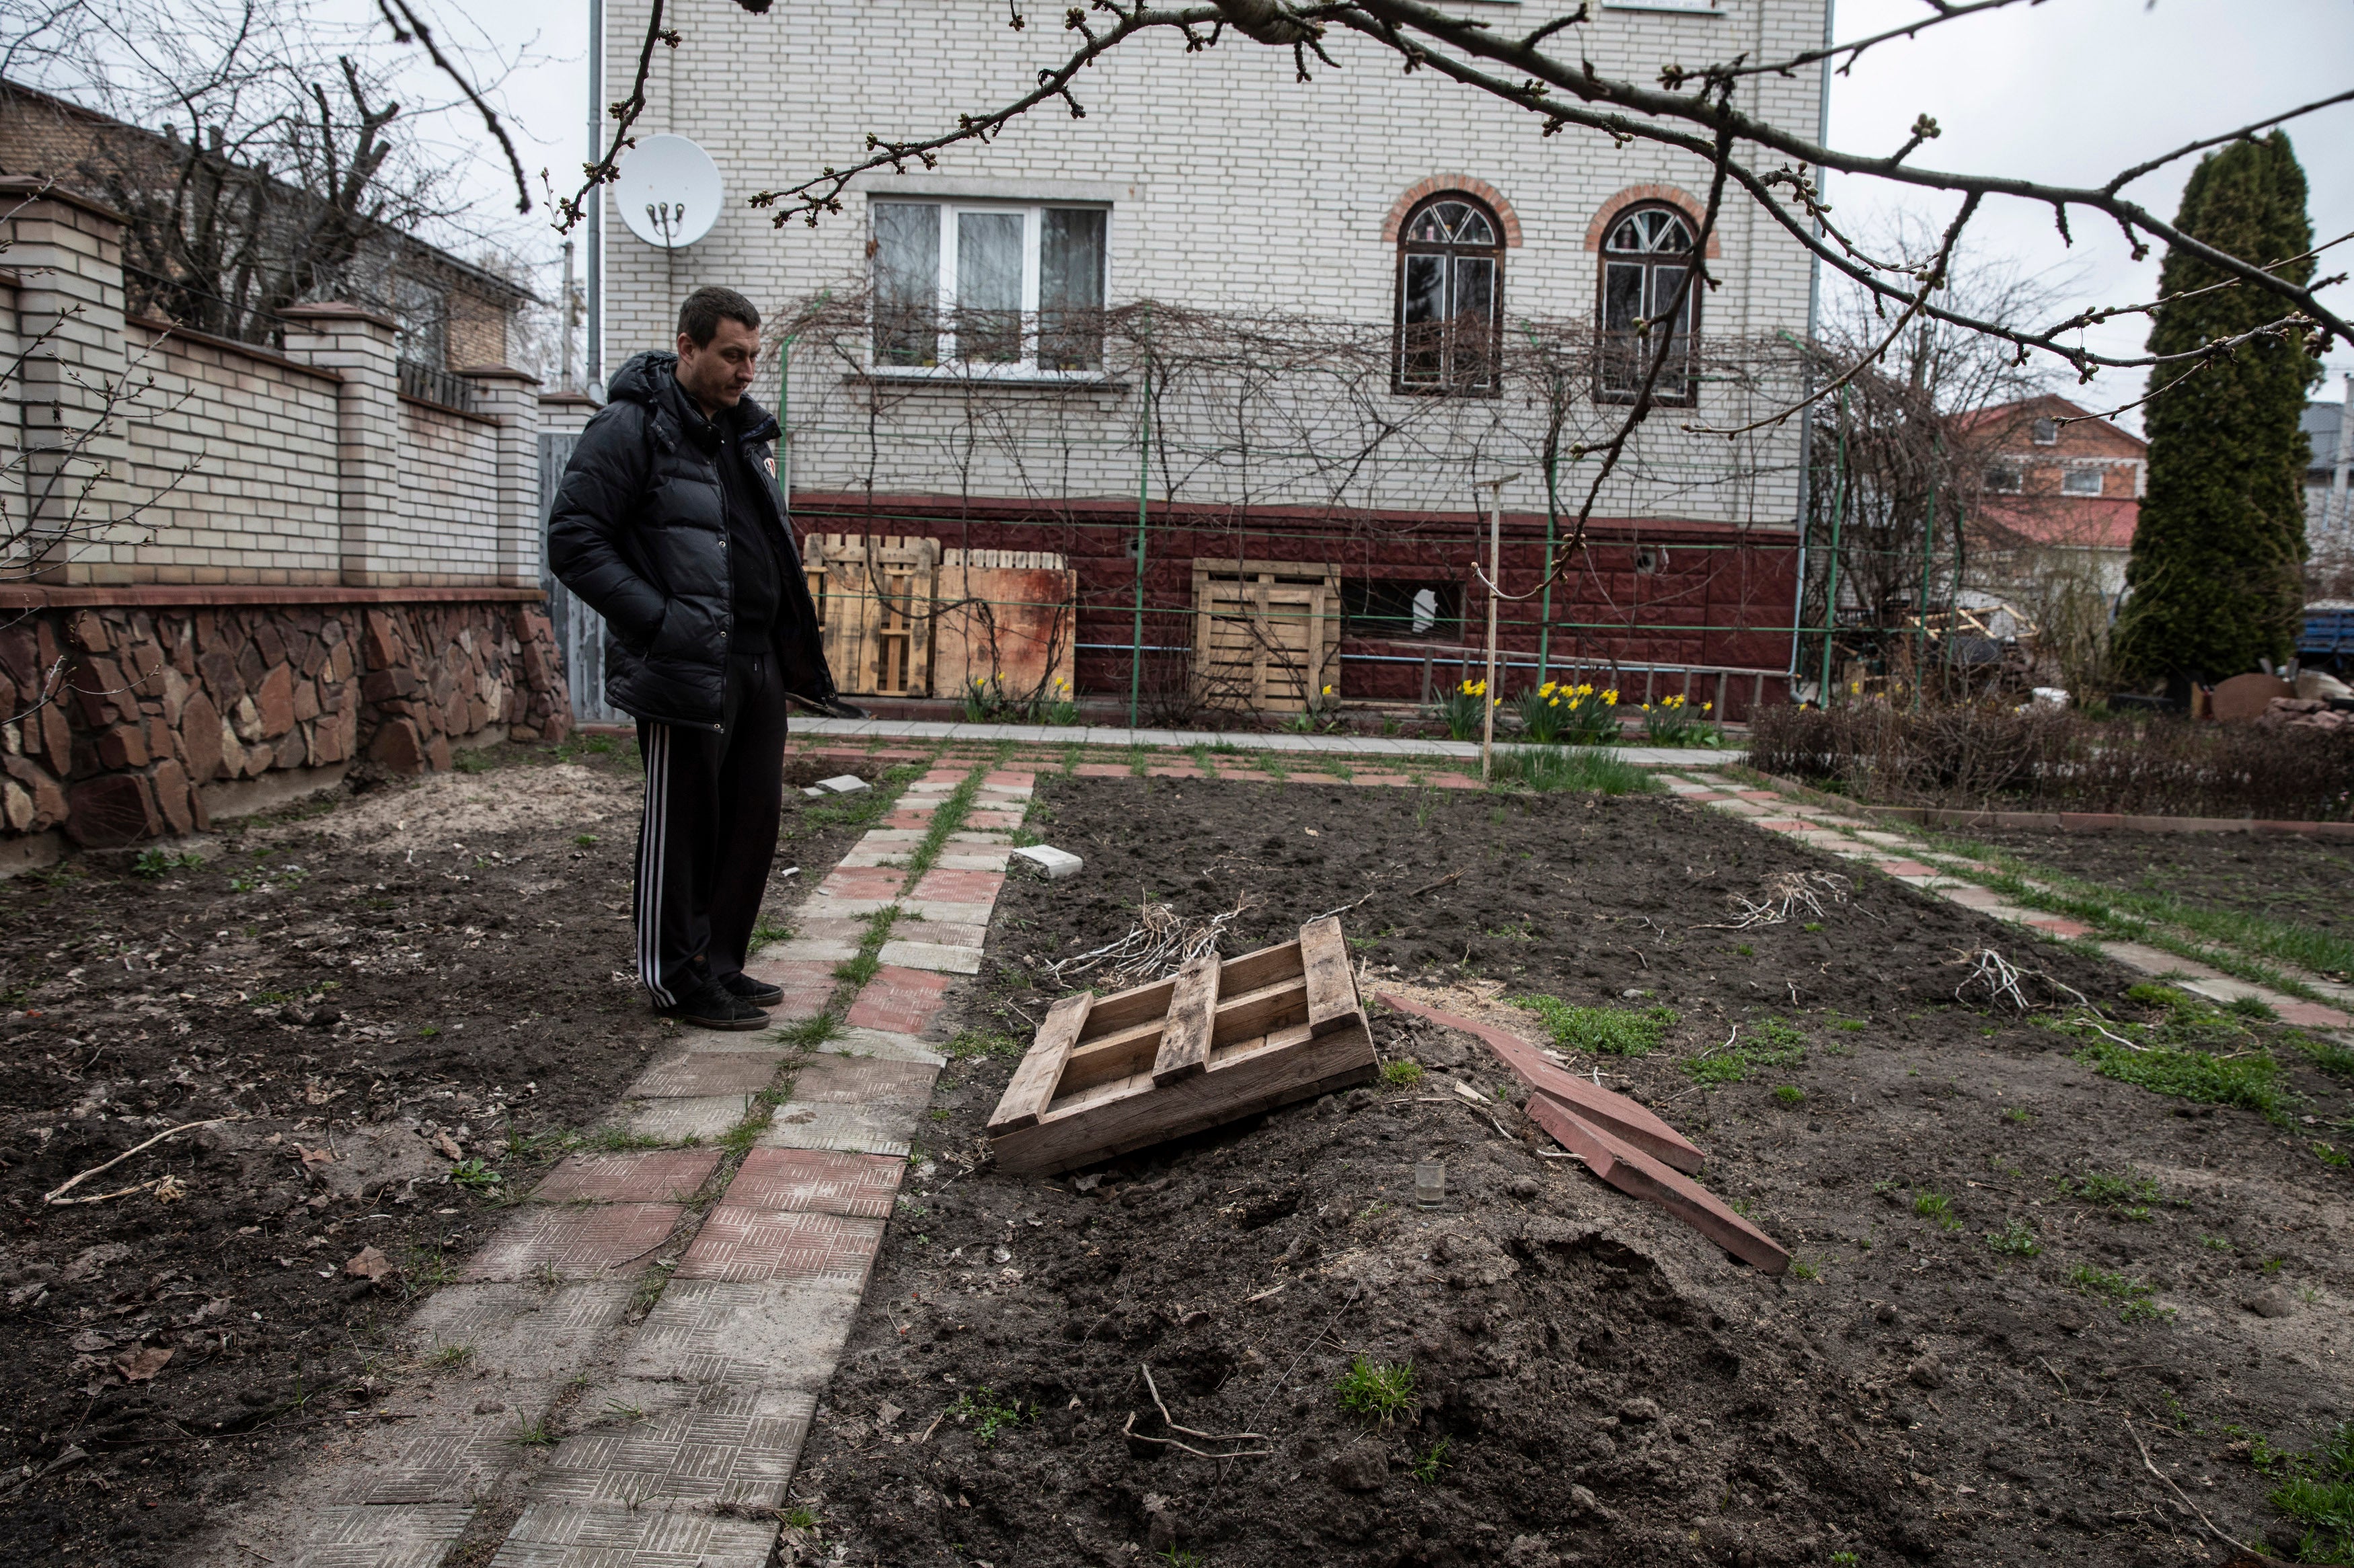 Pavlo Prykhodko stands by his father's grave in the backyard of his parent's home in Vorzel, Ukraine